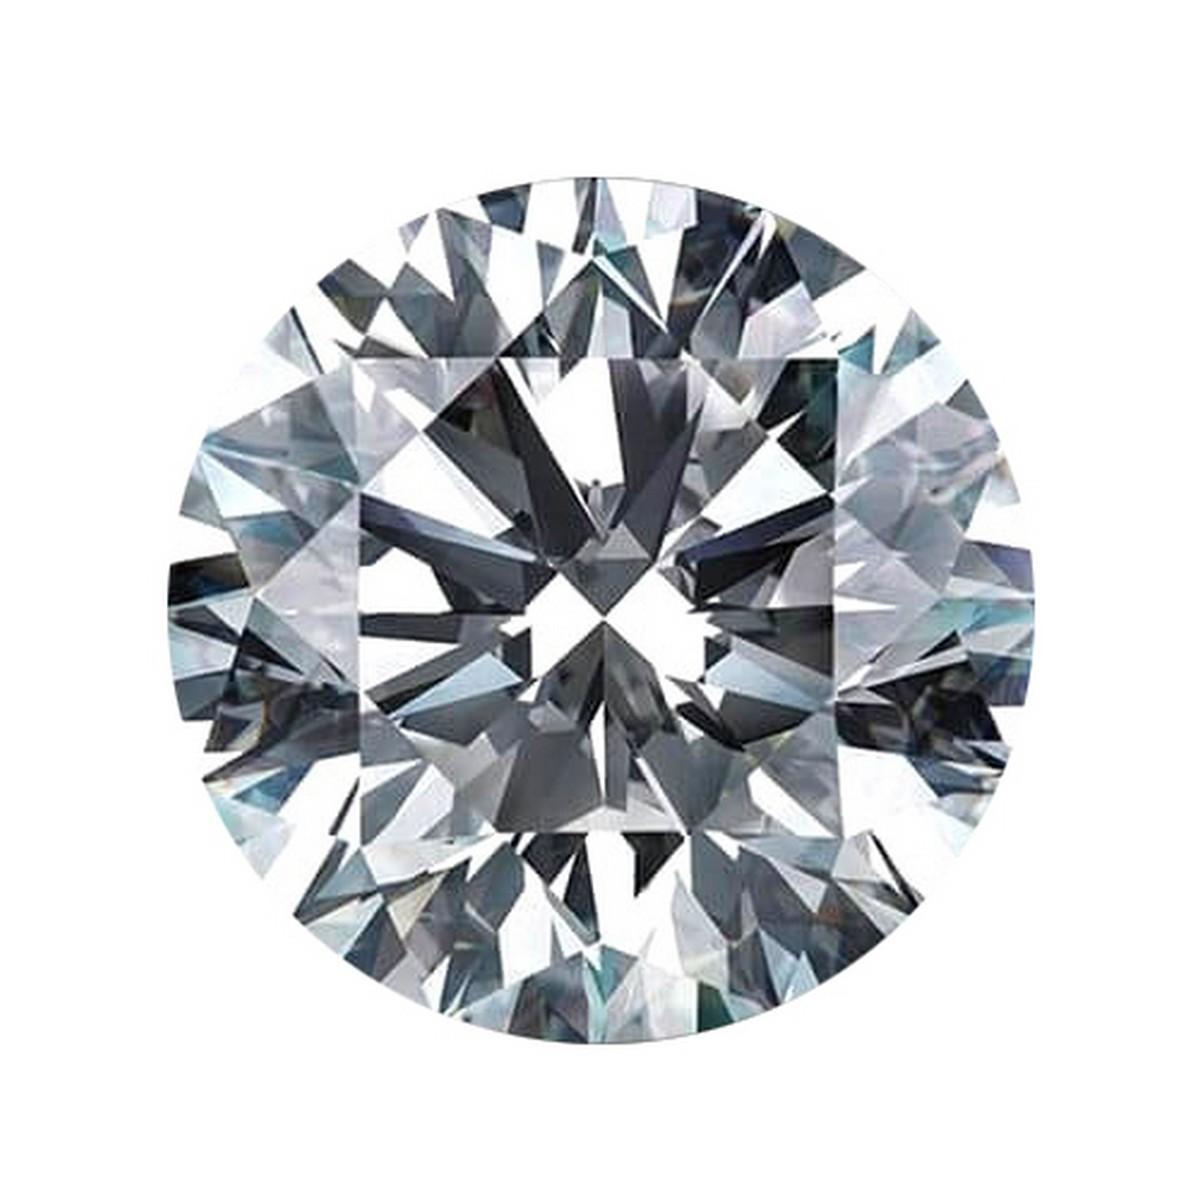 3.13 ctw. VVS2 IGI Certified Round Cut Loose Diamond (LAB GROWN)